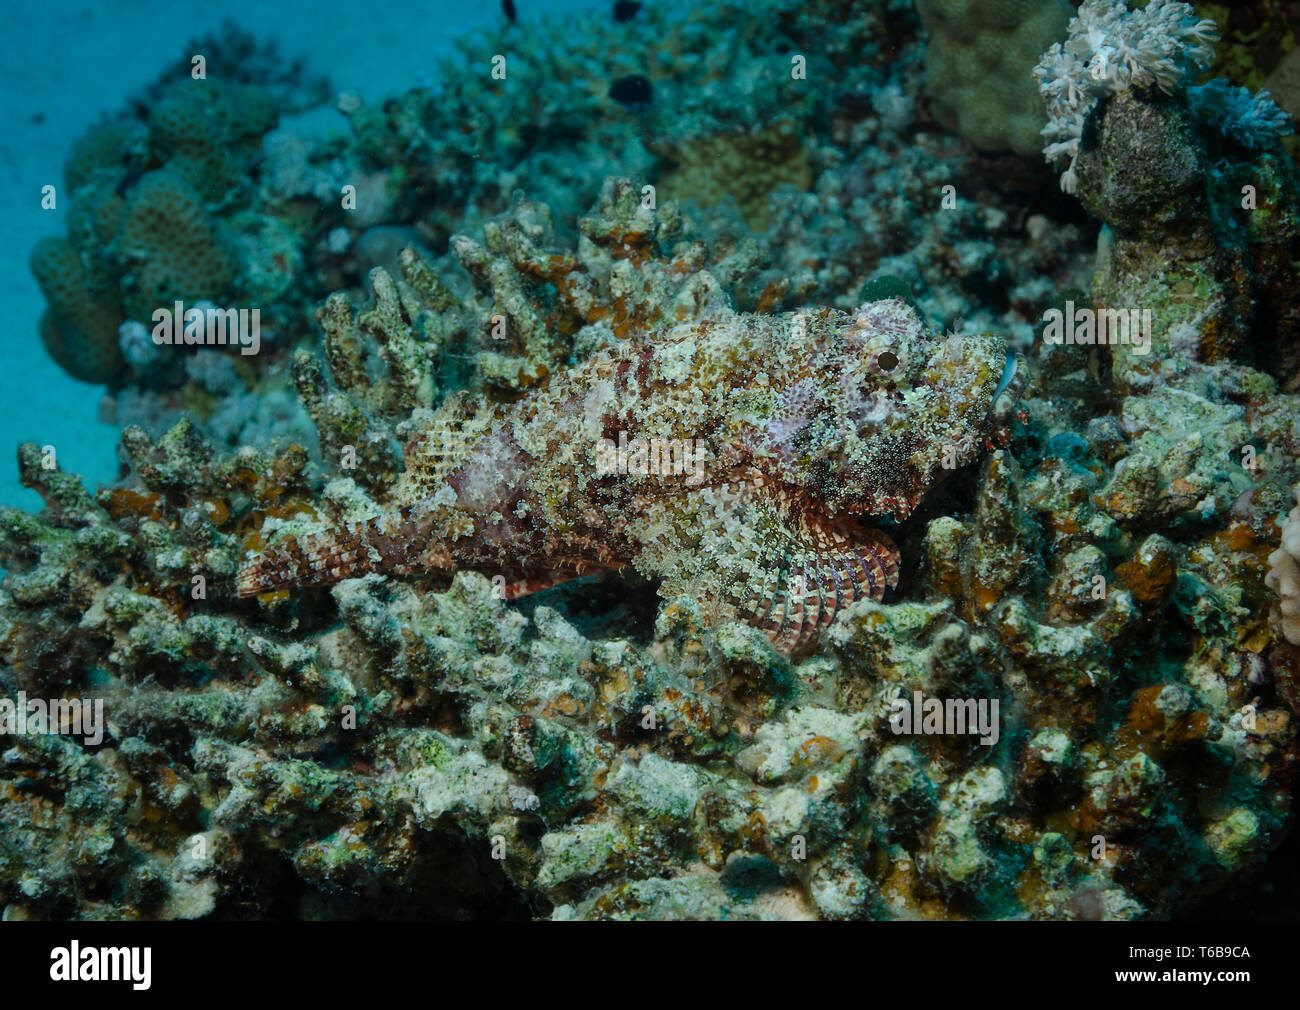 Tassled Scorpionfish, Scorpaenopsis oxycephalus, disguised on hard coral, Marsa Alam, Red Sea, Egypt Stock Photo